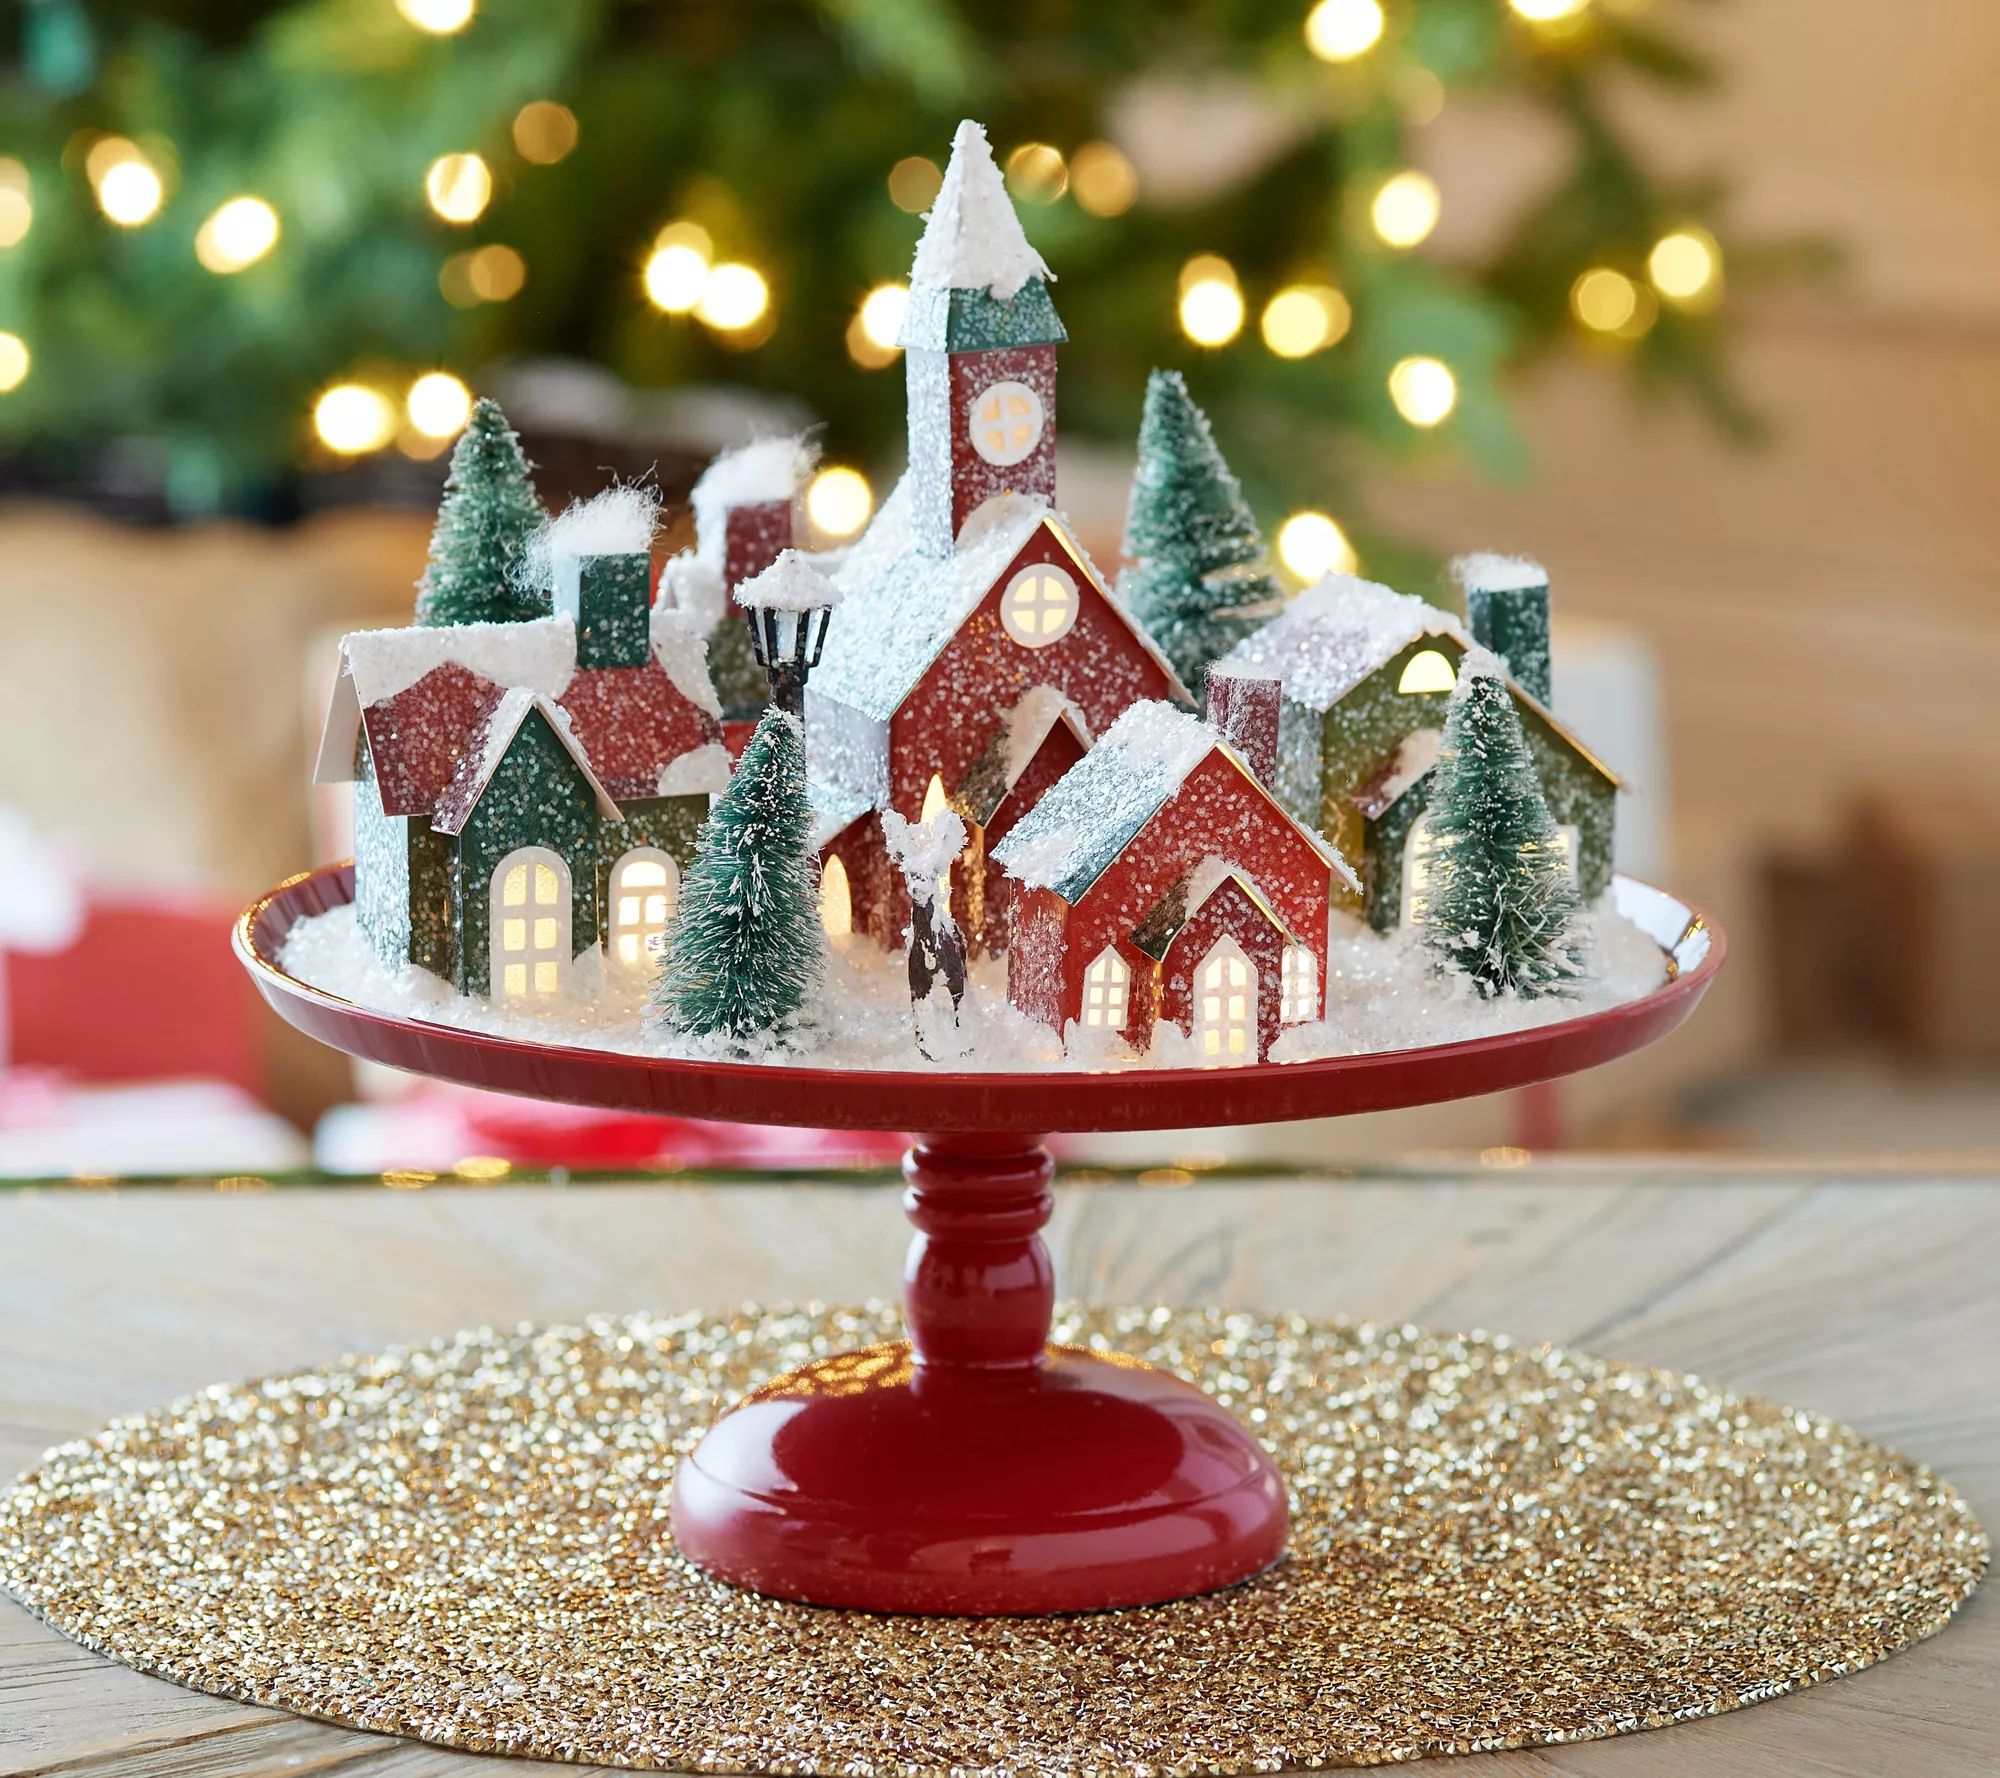 Mr. Christmas Illuminated Retro Village on Cake Plate - QVC.com | QVC